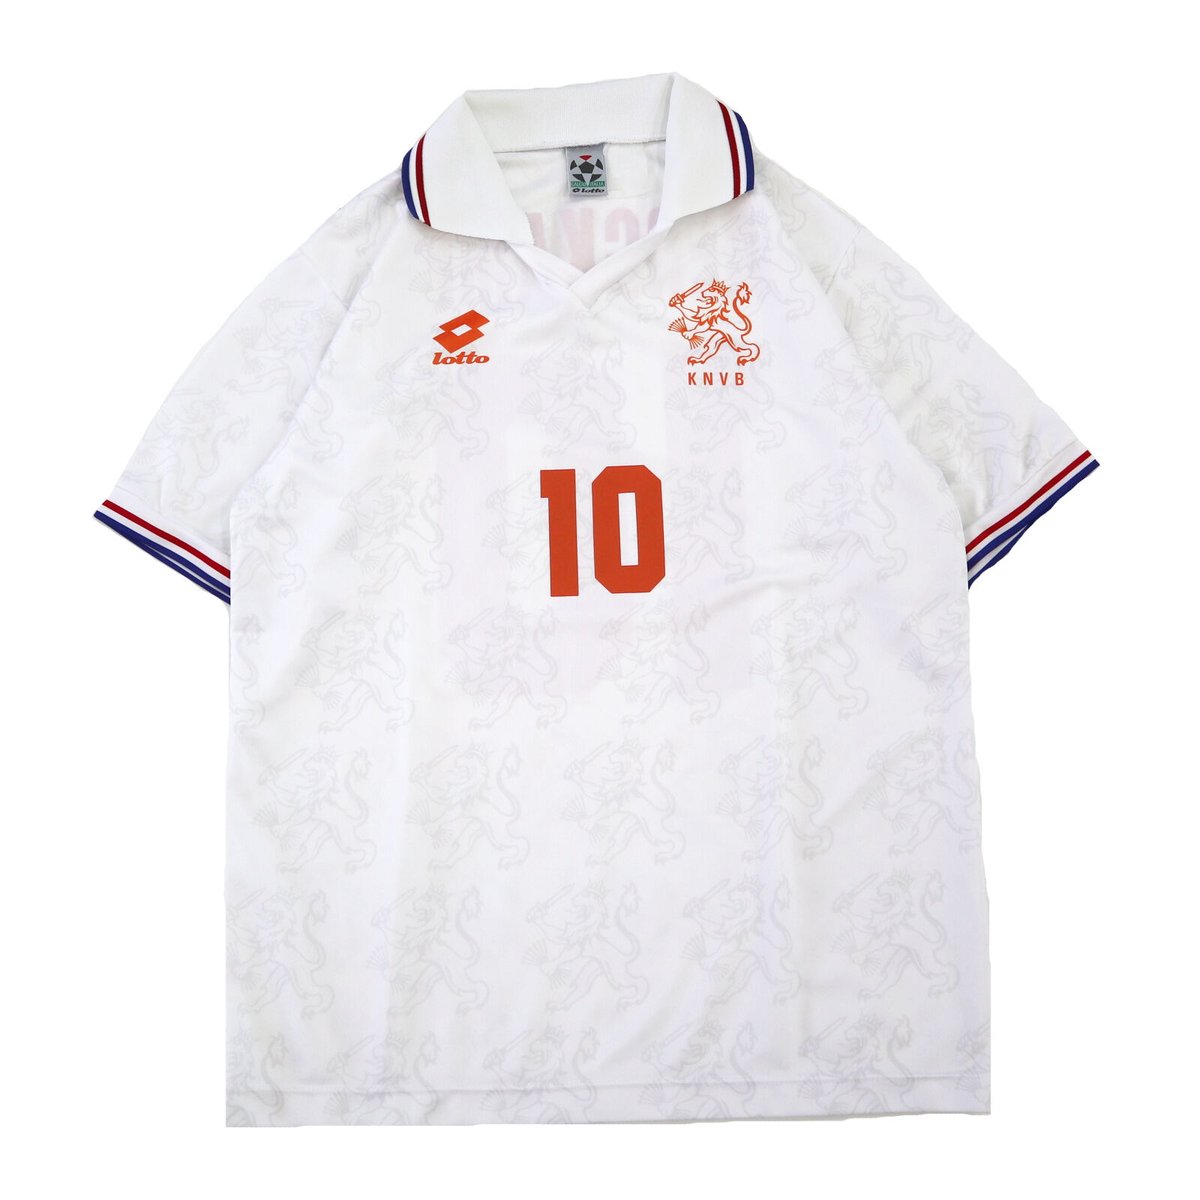 90's Lotto "Oranje" "Dennis Bergkamp" Game Shir...